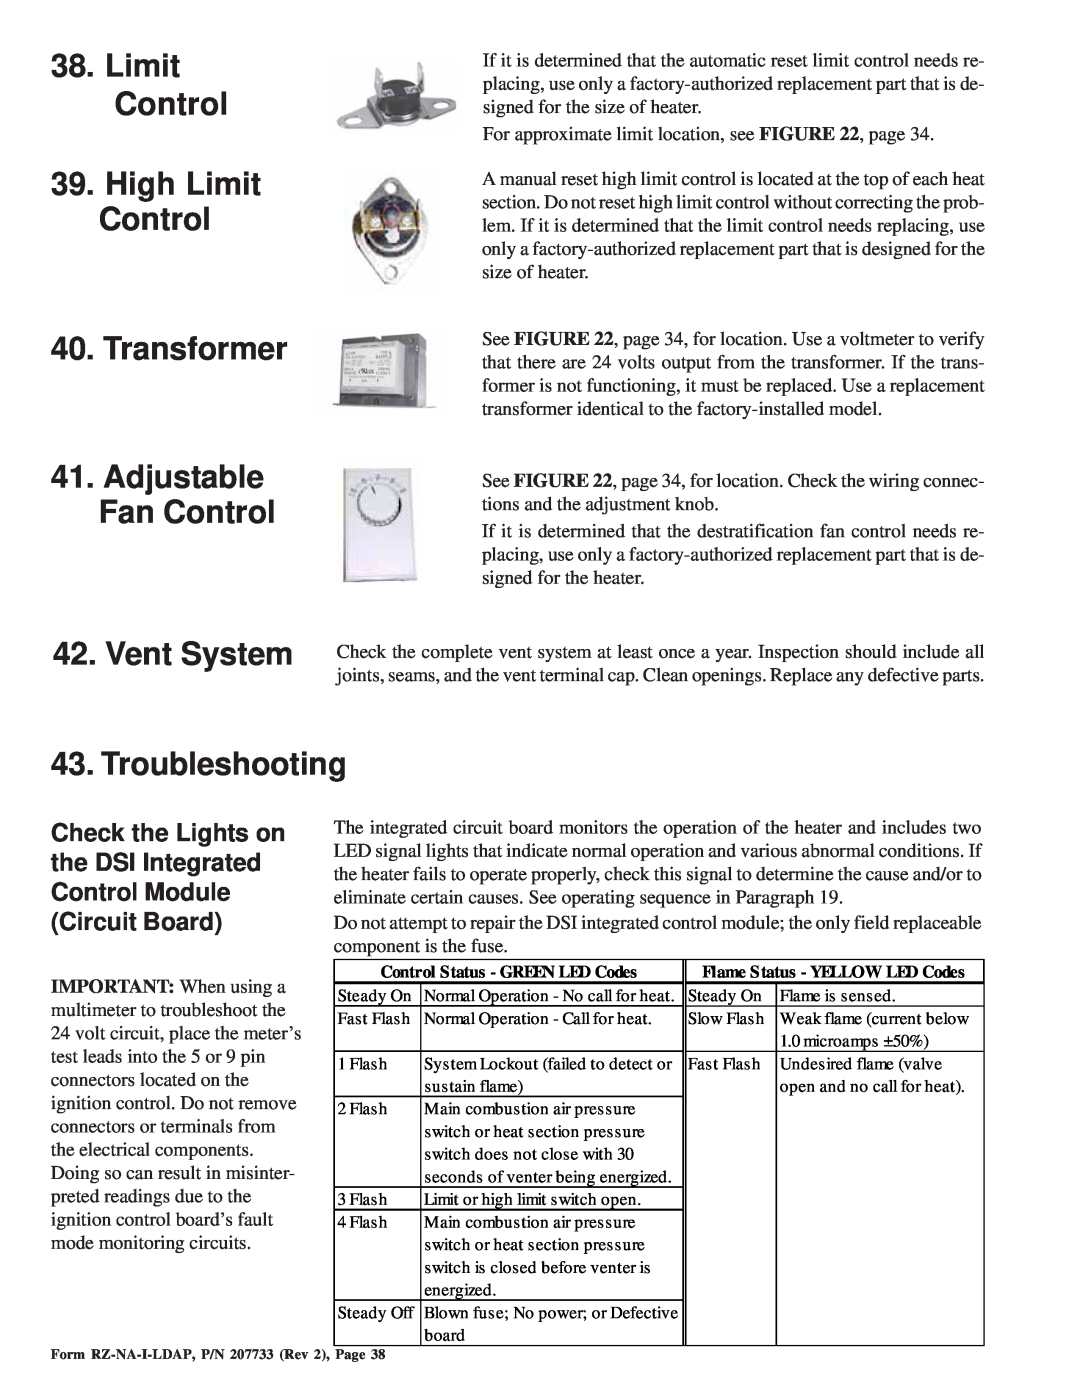 Thomas & Betts LDAP 1200 warranty Limit Control 39.High Limit Control, Transformer 41.Adjustable Fan Control, Vent System 